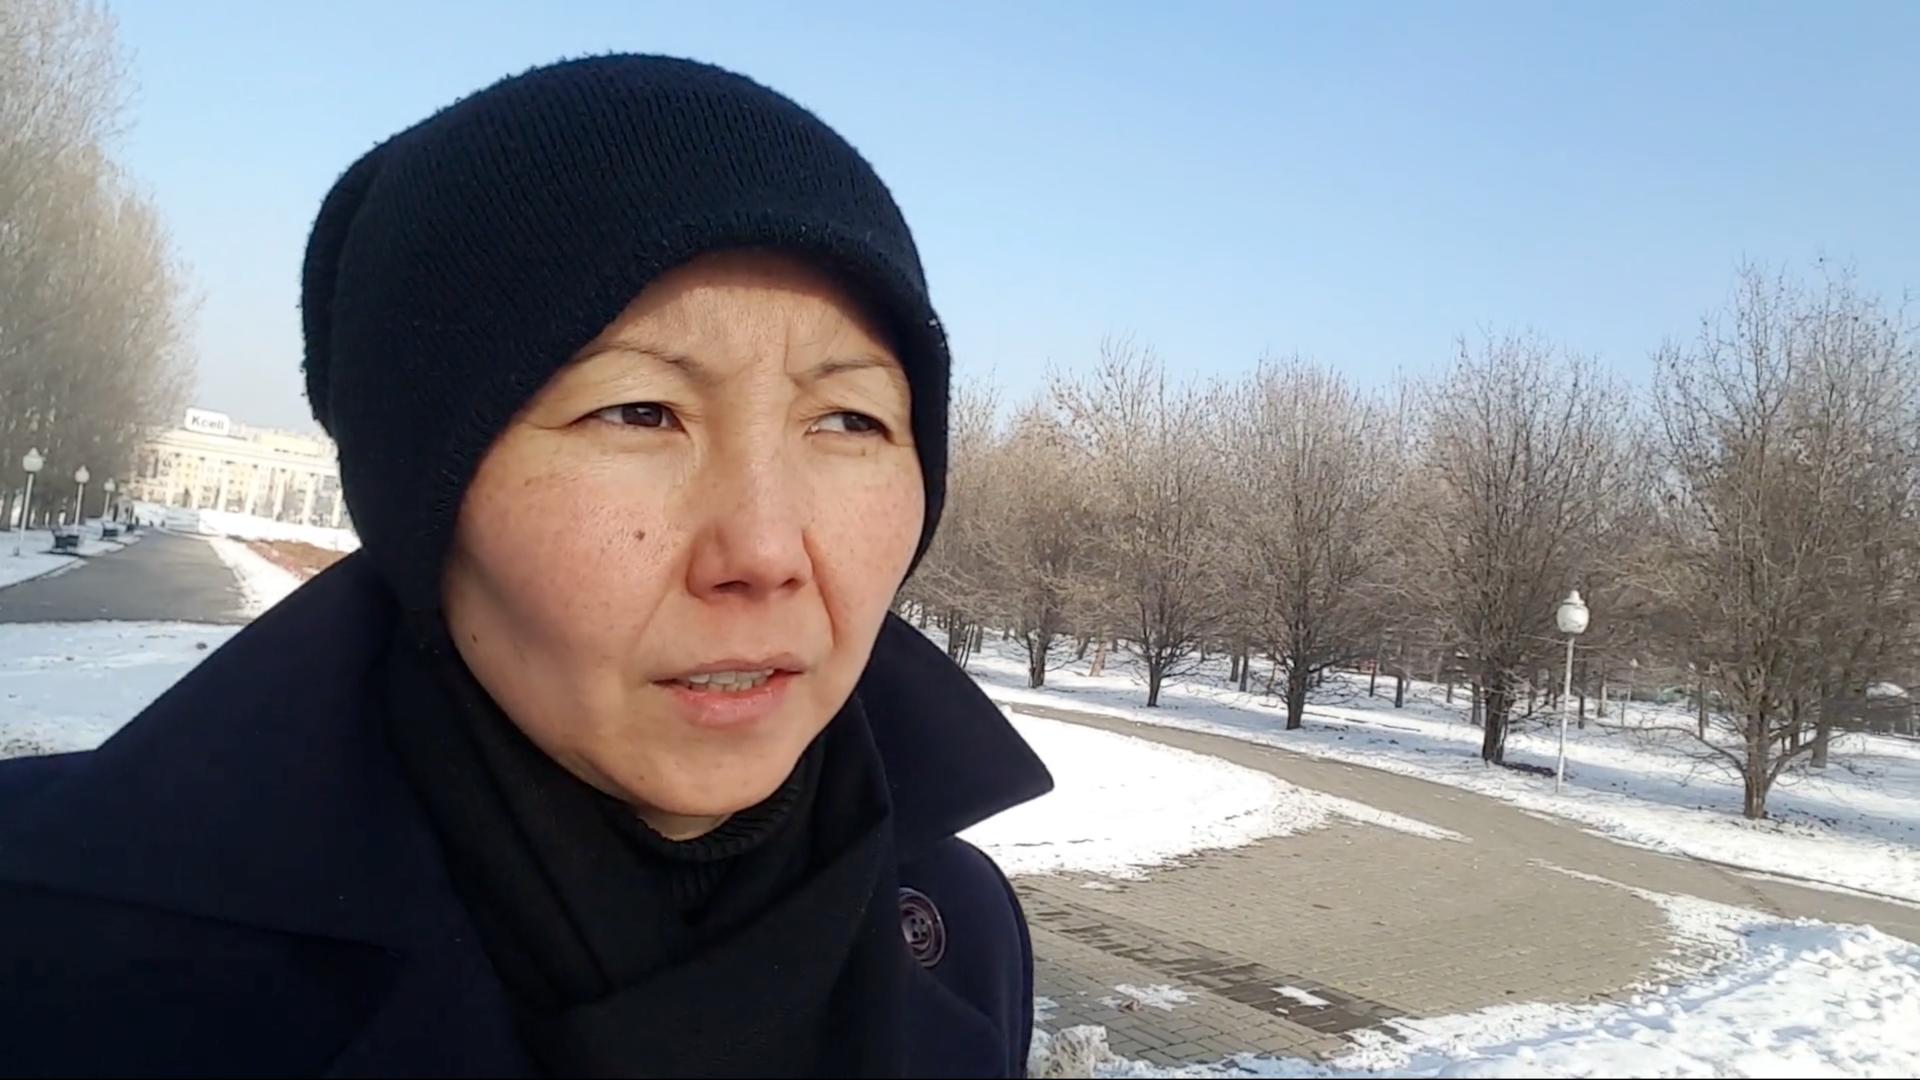 WELCOME TO THE USA / Meet ASSEL AUSHAKIMOVA | KAZAKHSTAN